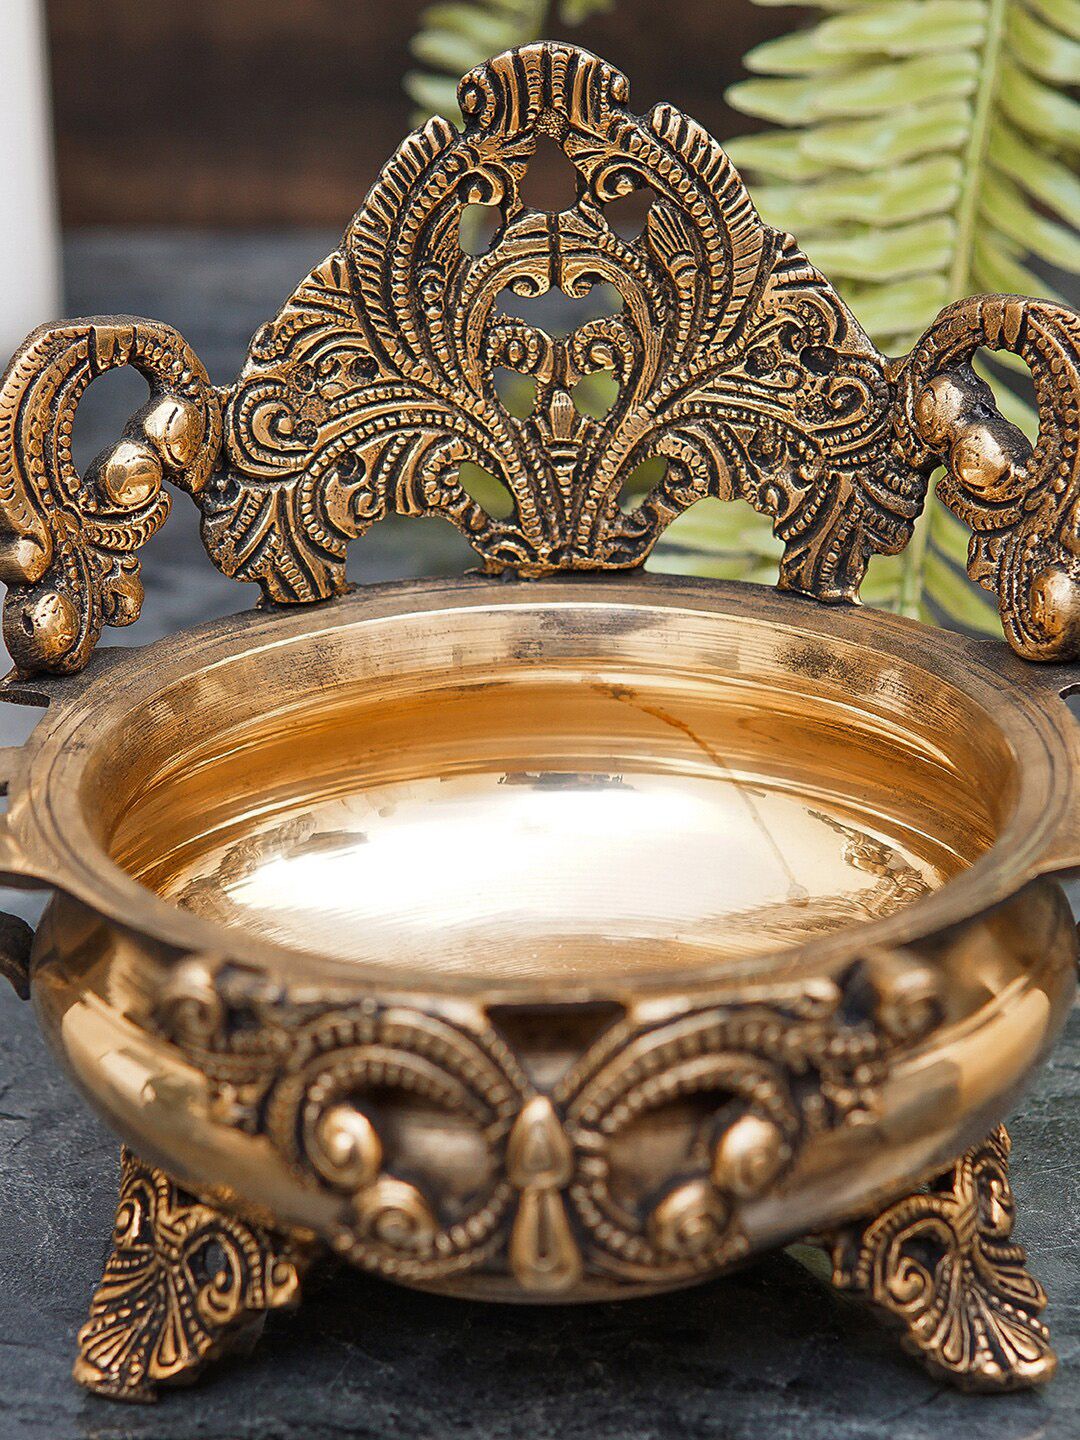 StatueStudio Gold Decorative Urli Bowl Showpiece Price in India